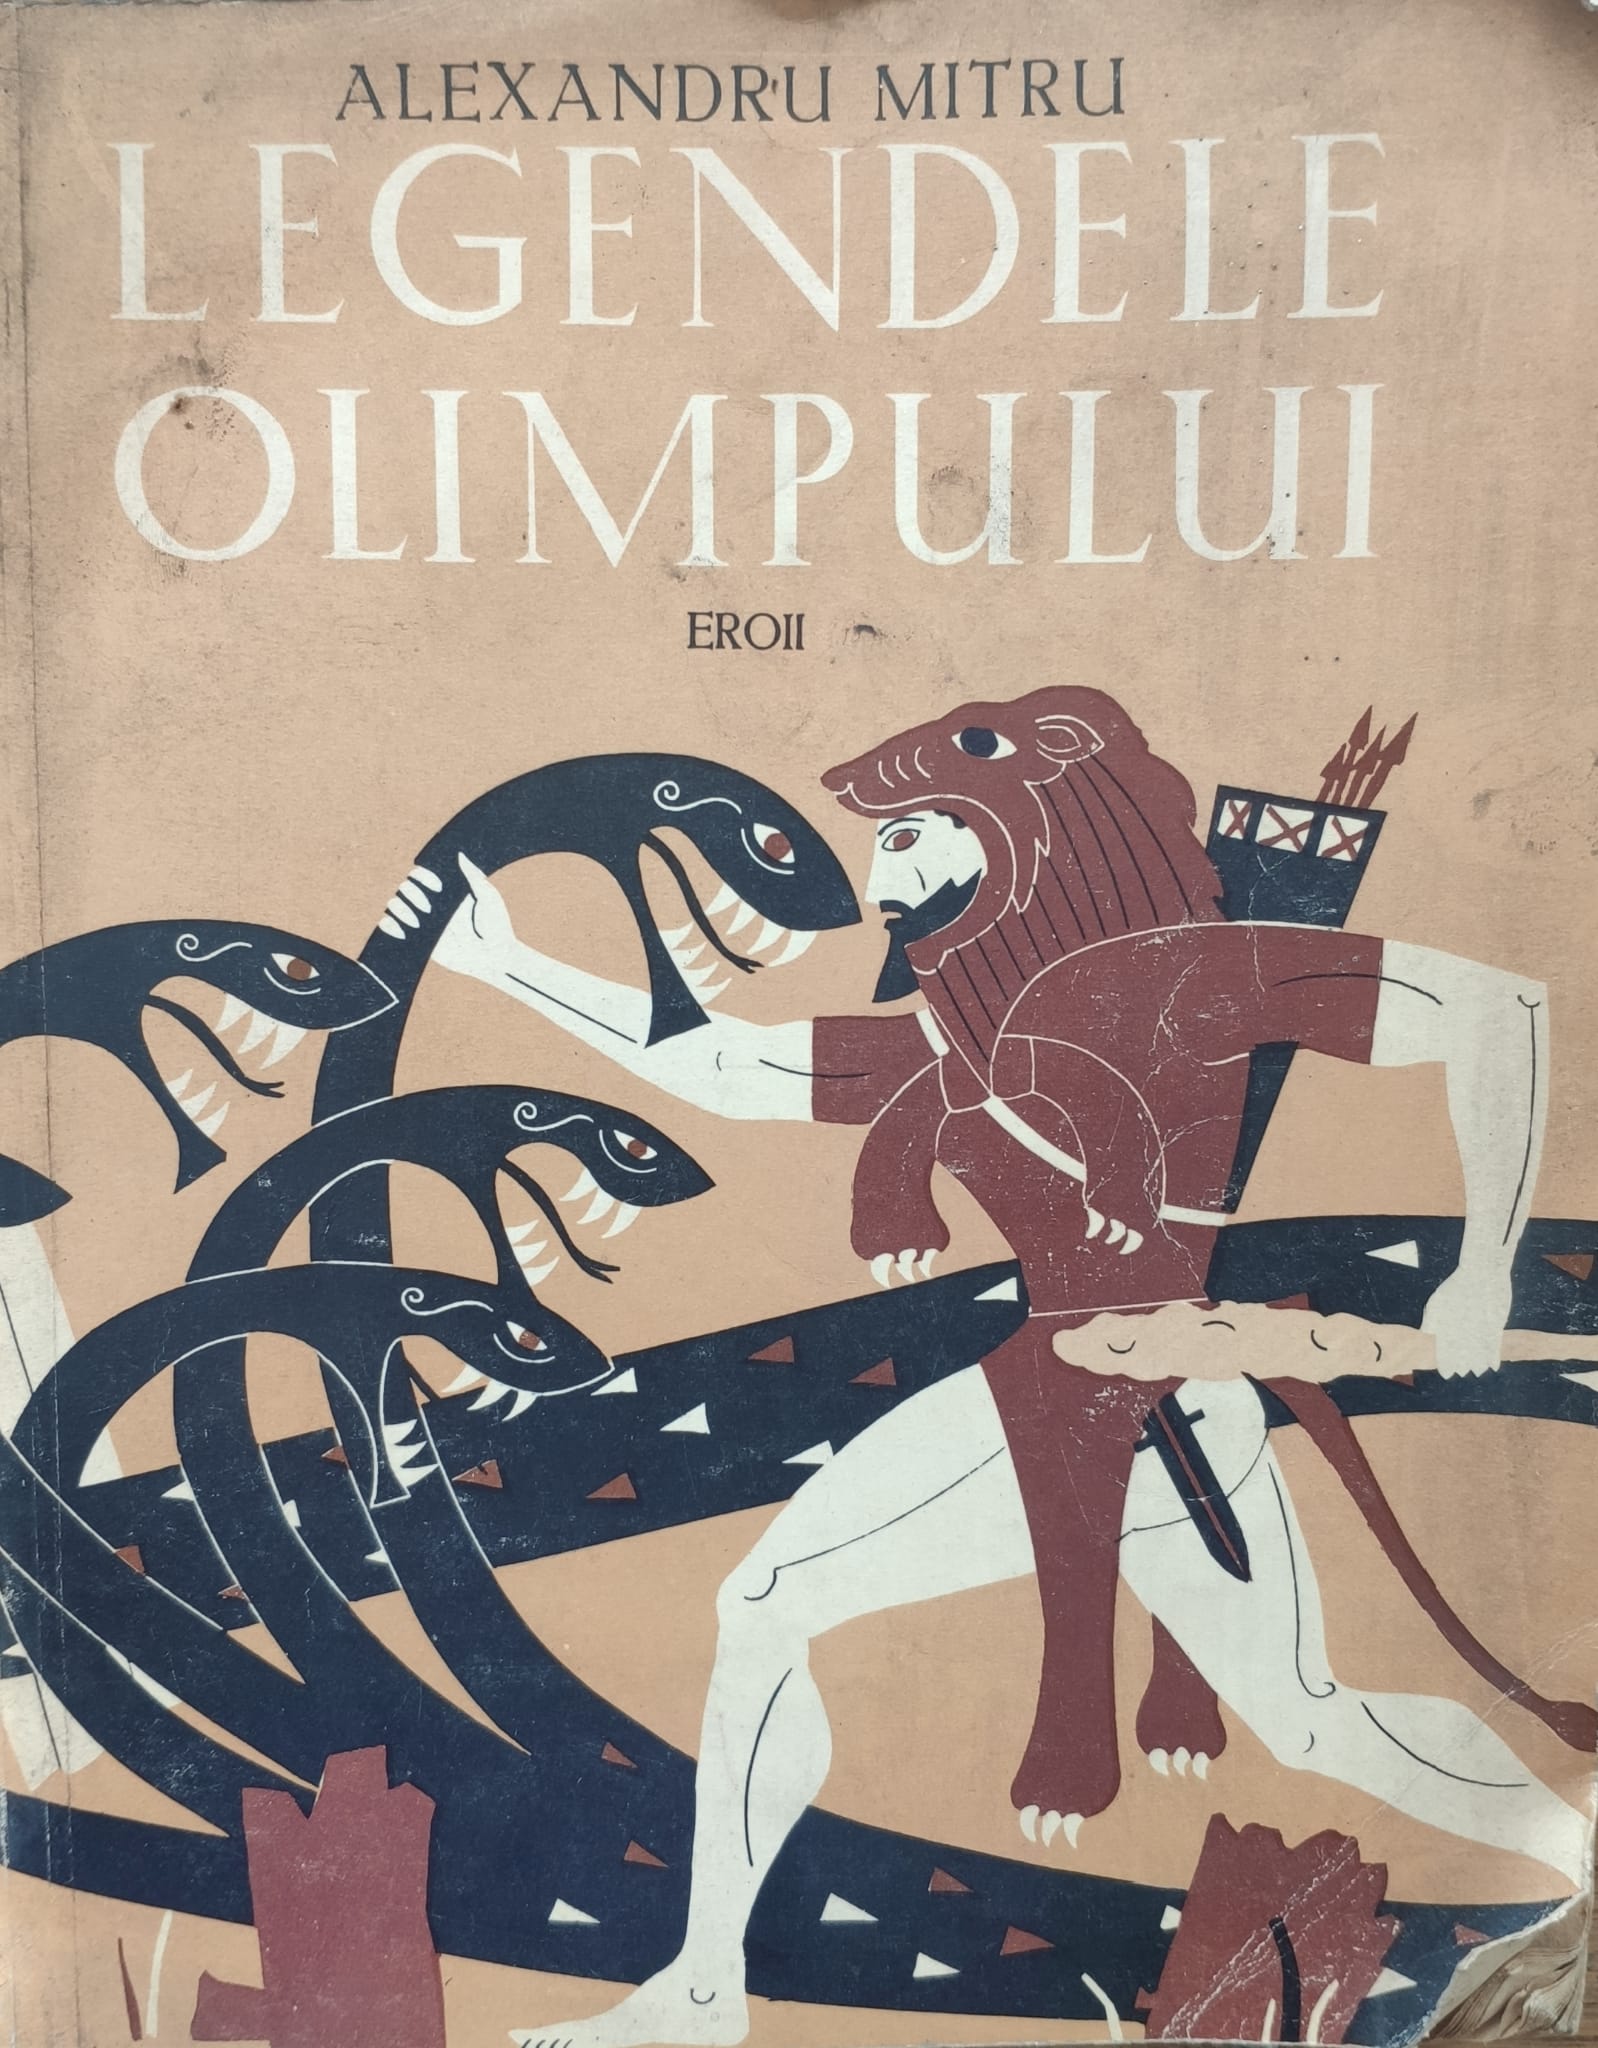 legendele olimpului vol.2 eroii                                                                      alexandru mitru(ilustratii:c. condacci)                                                             